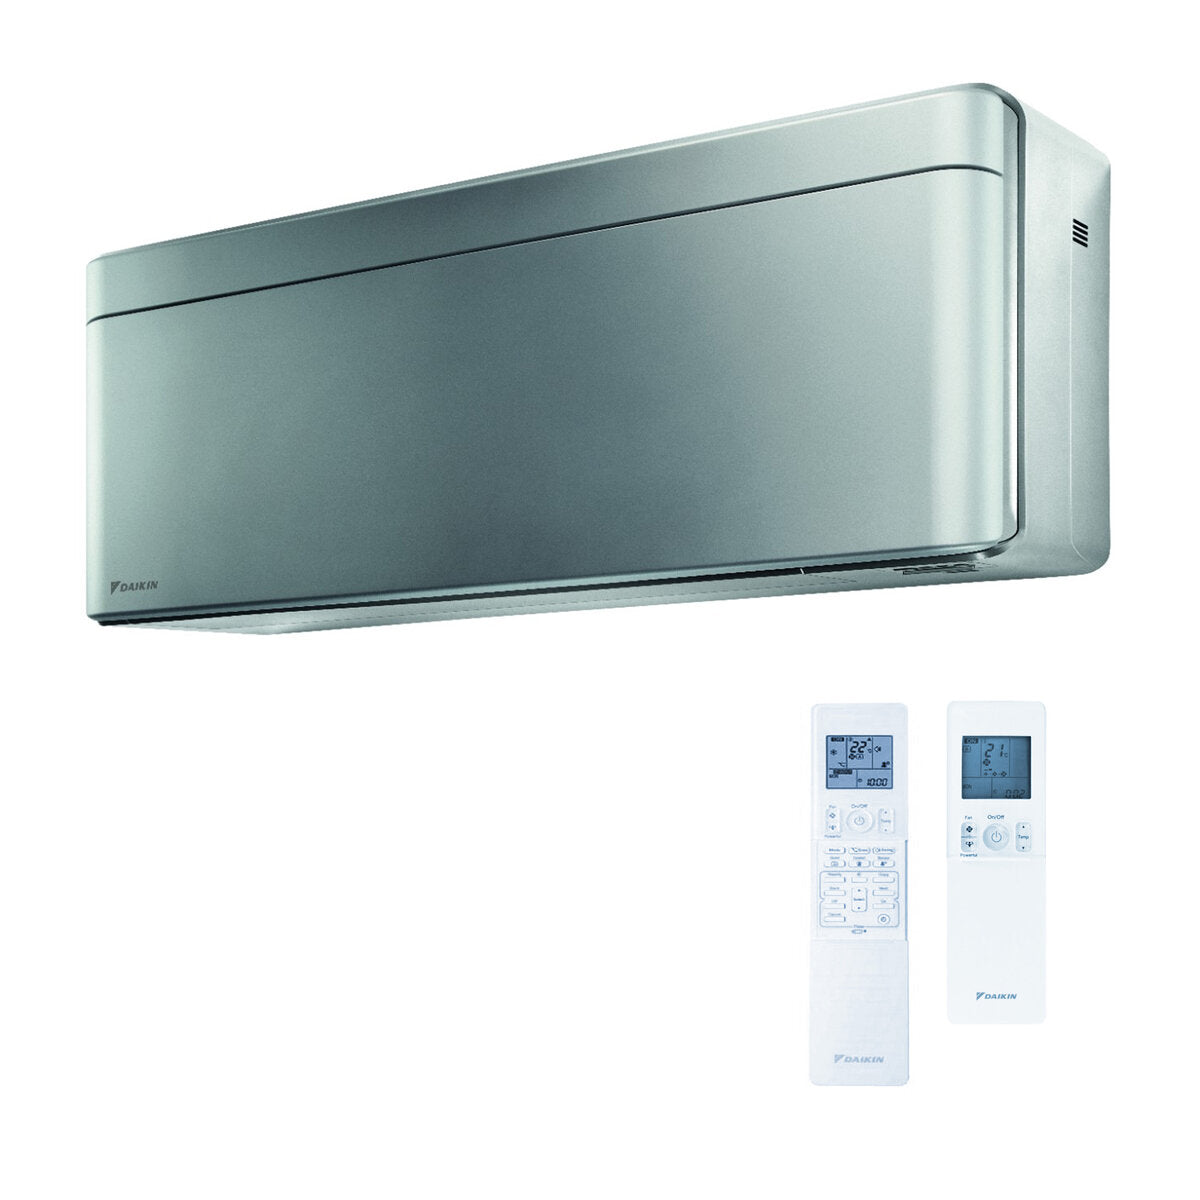 Daikin Stylish square split air conditioner 9000 + 9000 + 12000 + 12000 BTU inverter A ++ wifi outdoor unit 8.0 kW